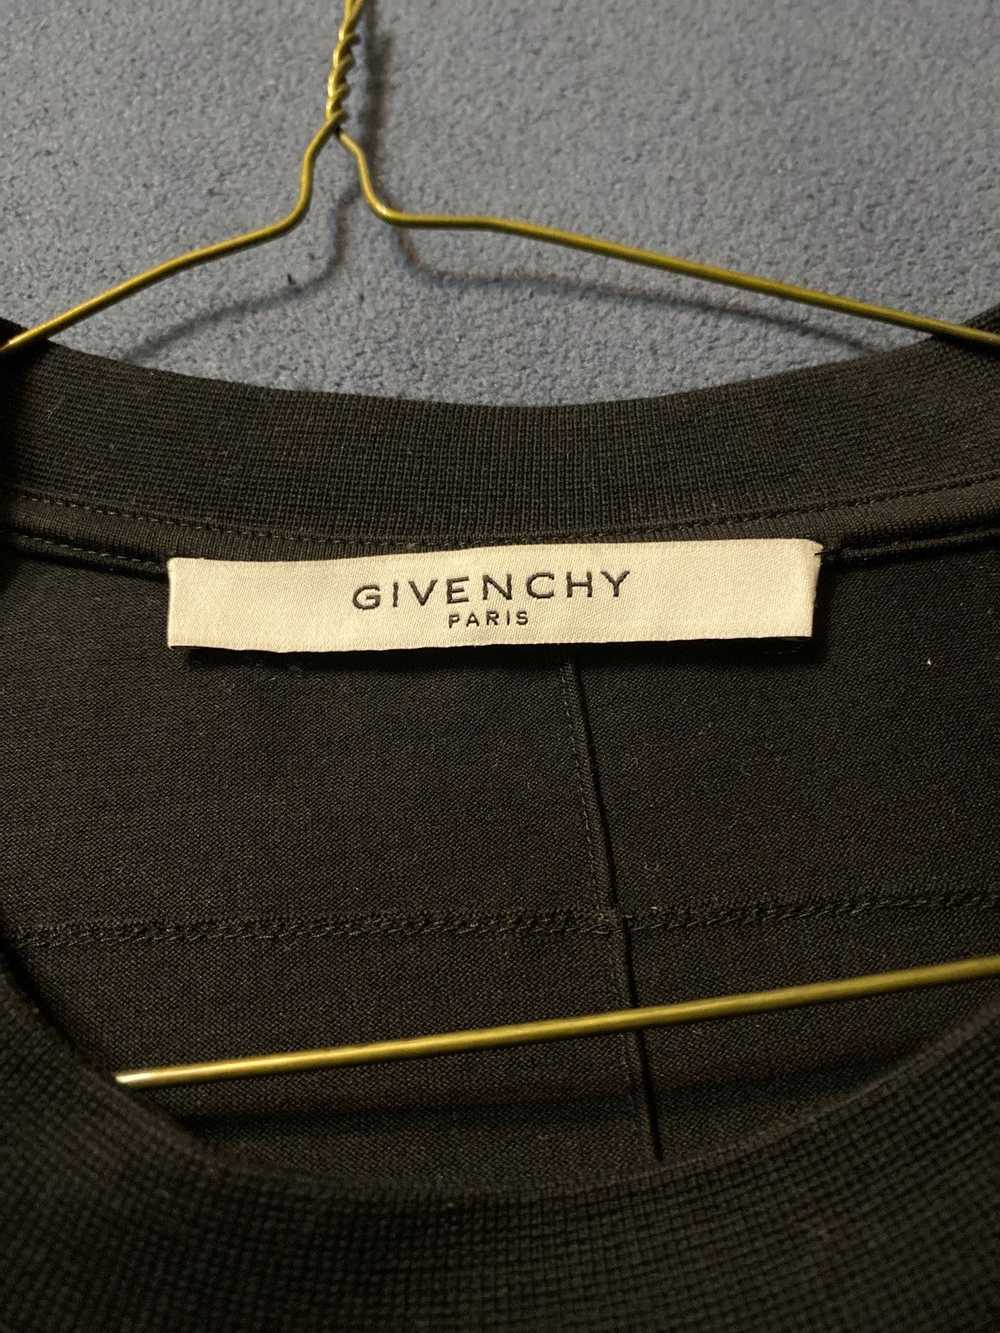 Givenchy Givenchy Rose Tee - image 4